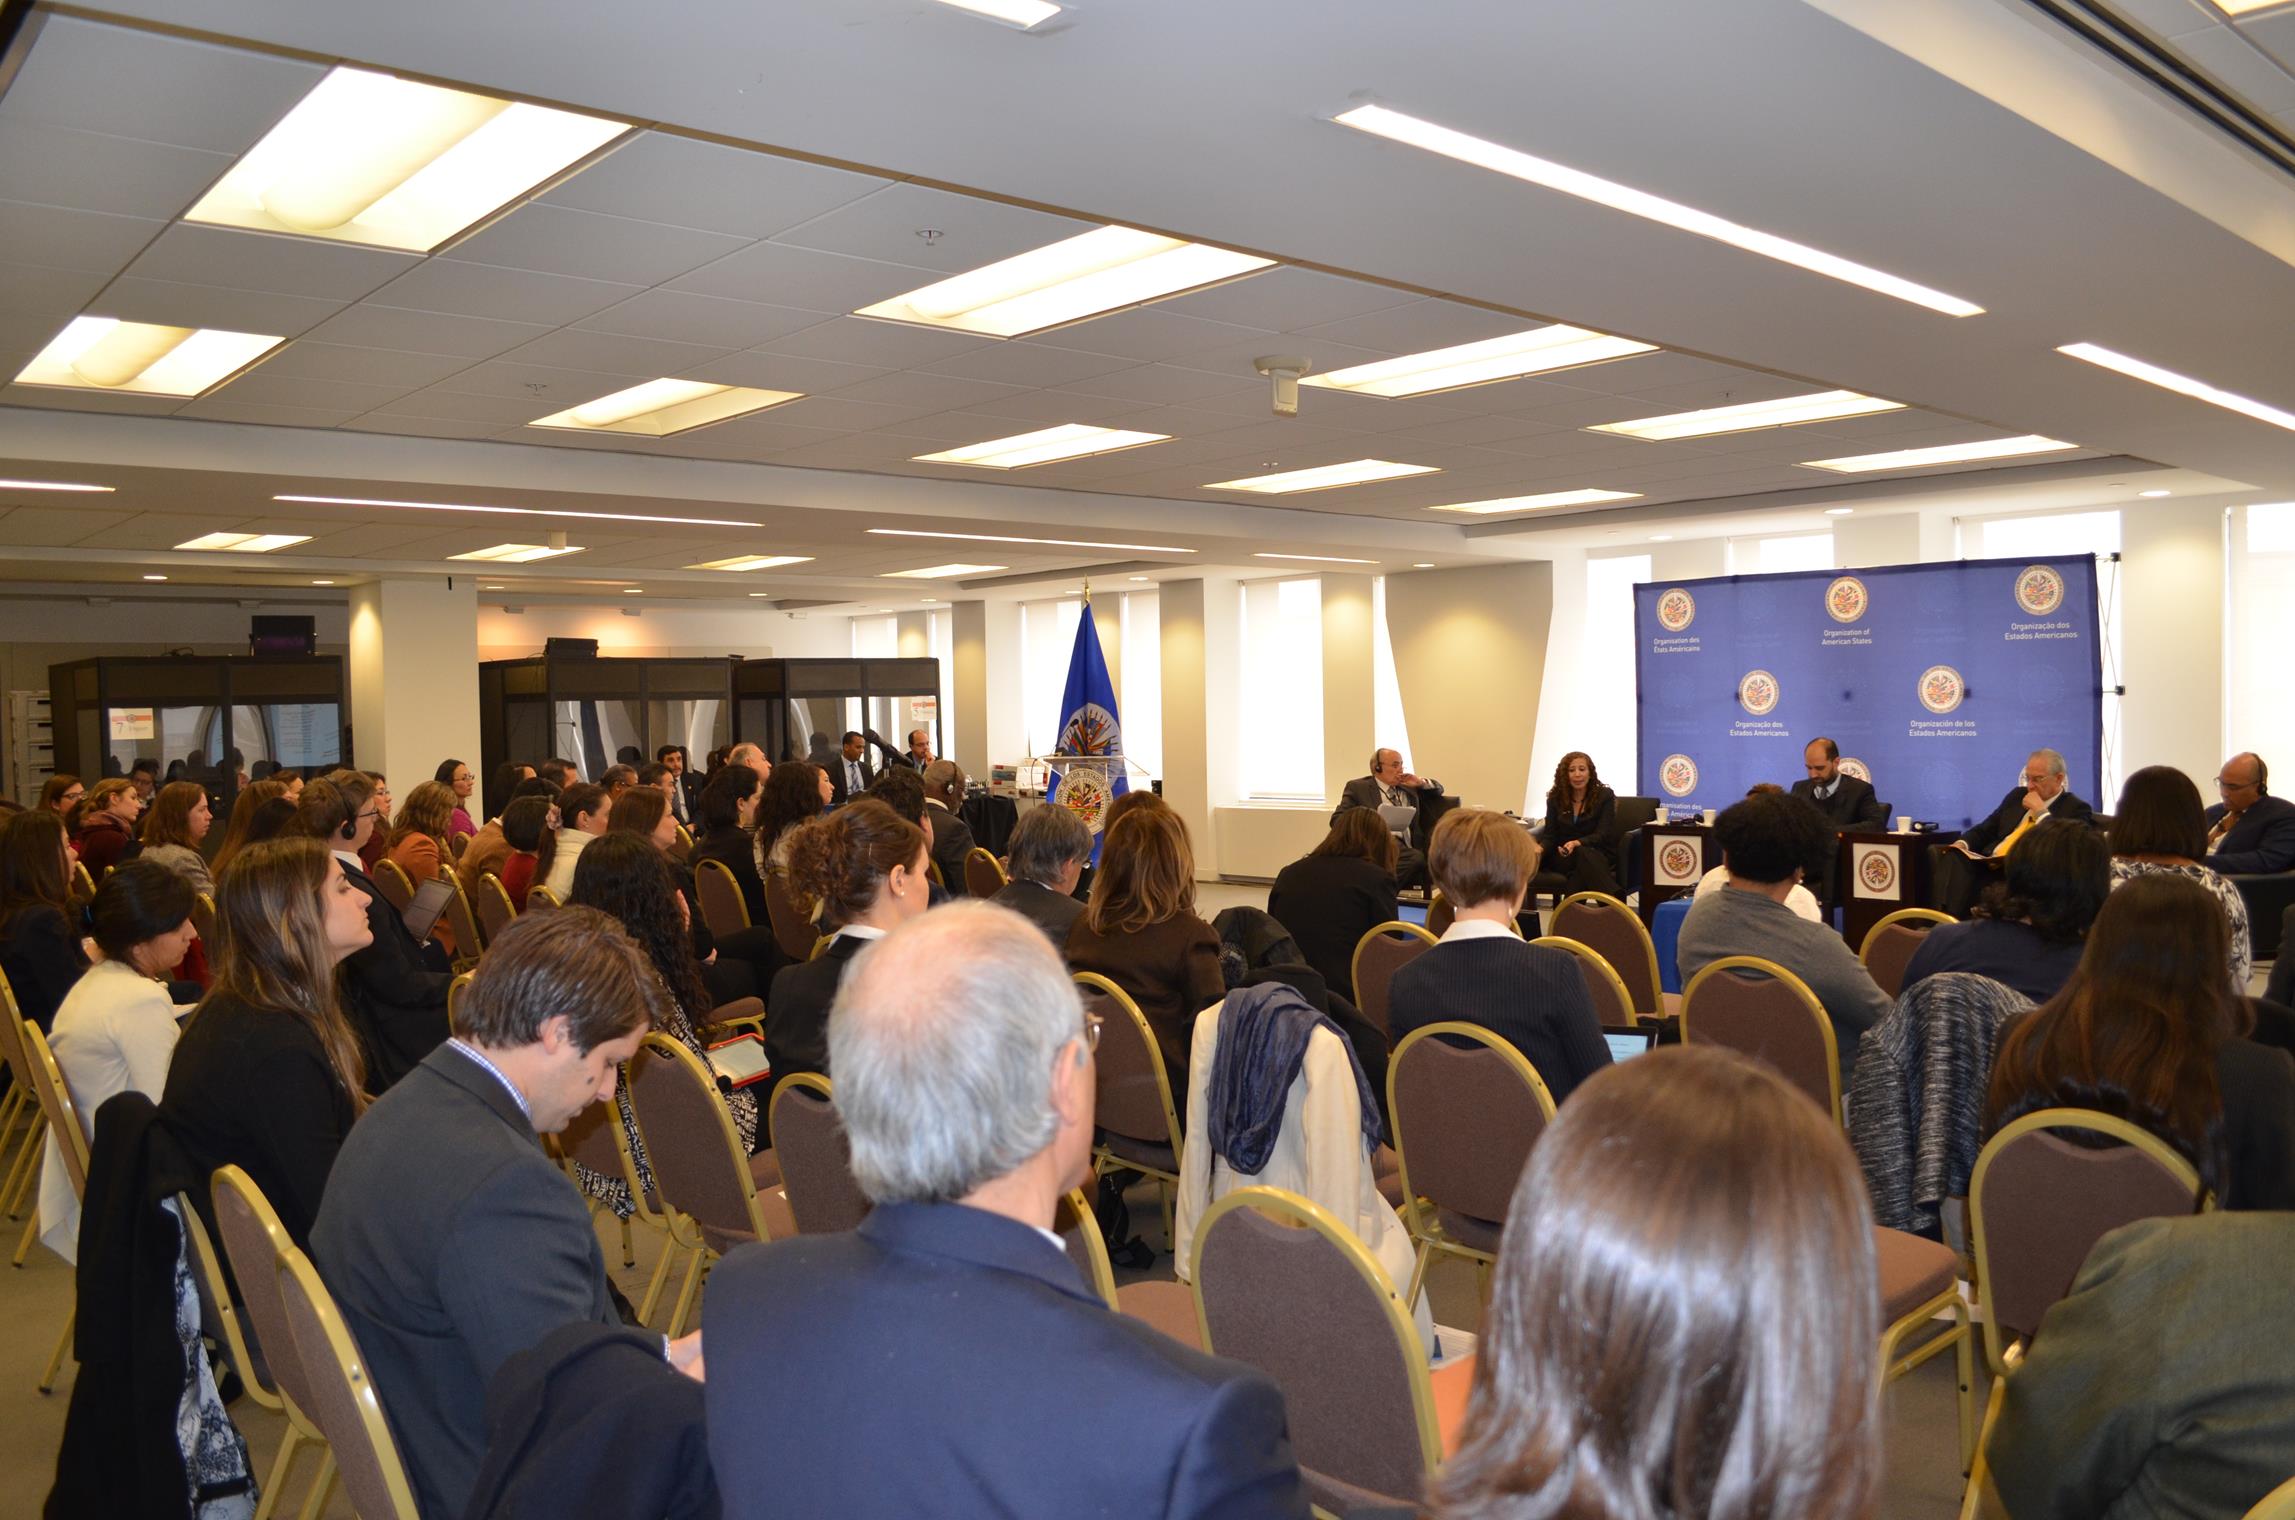 OAS Member States discuss the Post-2015 Development Agenda